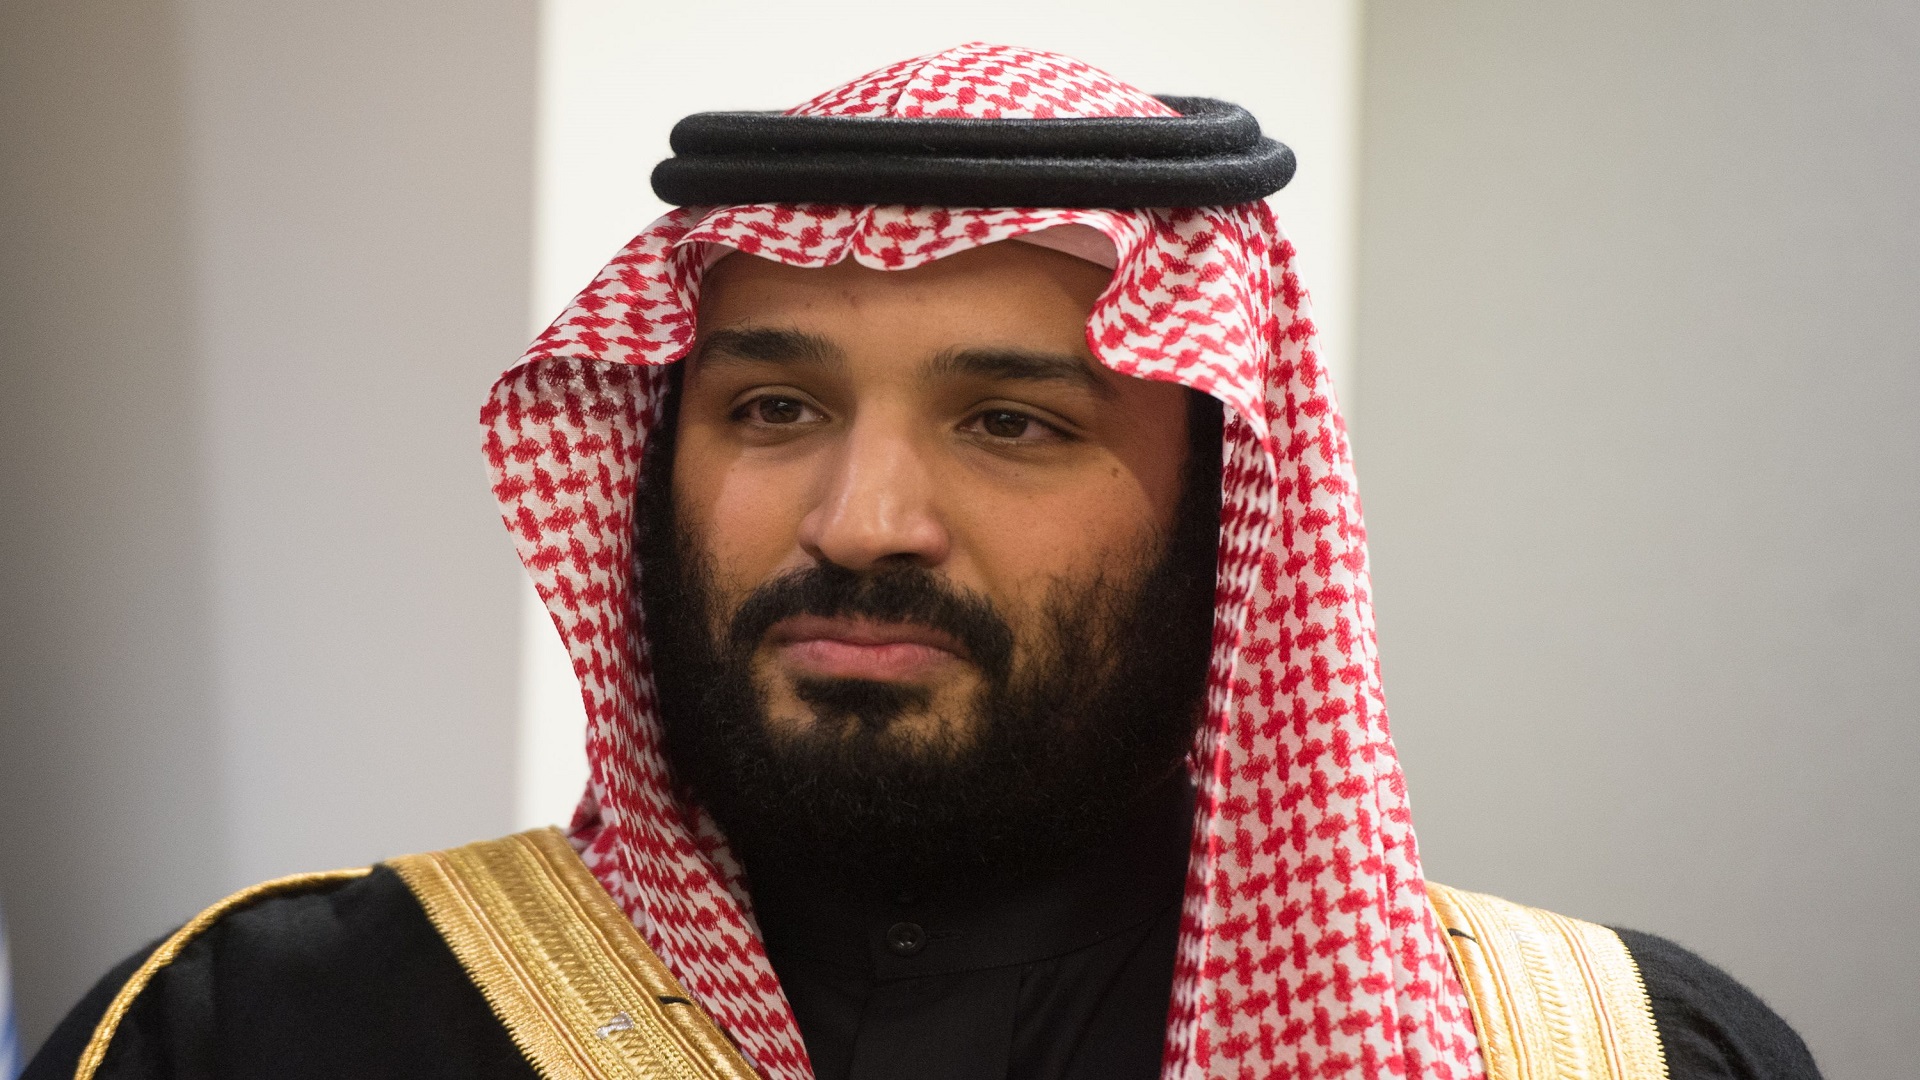 Халидом аль саудом. Мухаммед Бен Салман. Принц Бин Салман. Халид ибн Салман Аль Сауд. Саудовский принц Мухаммед Бен Салман.